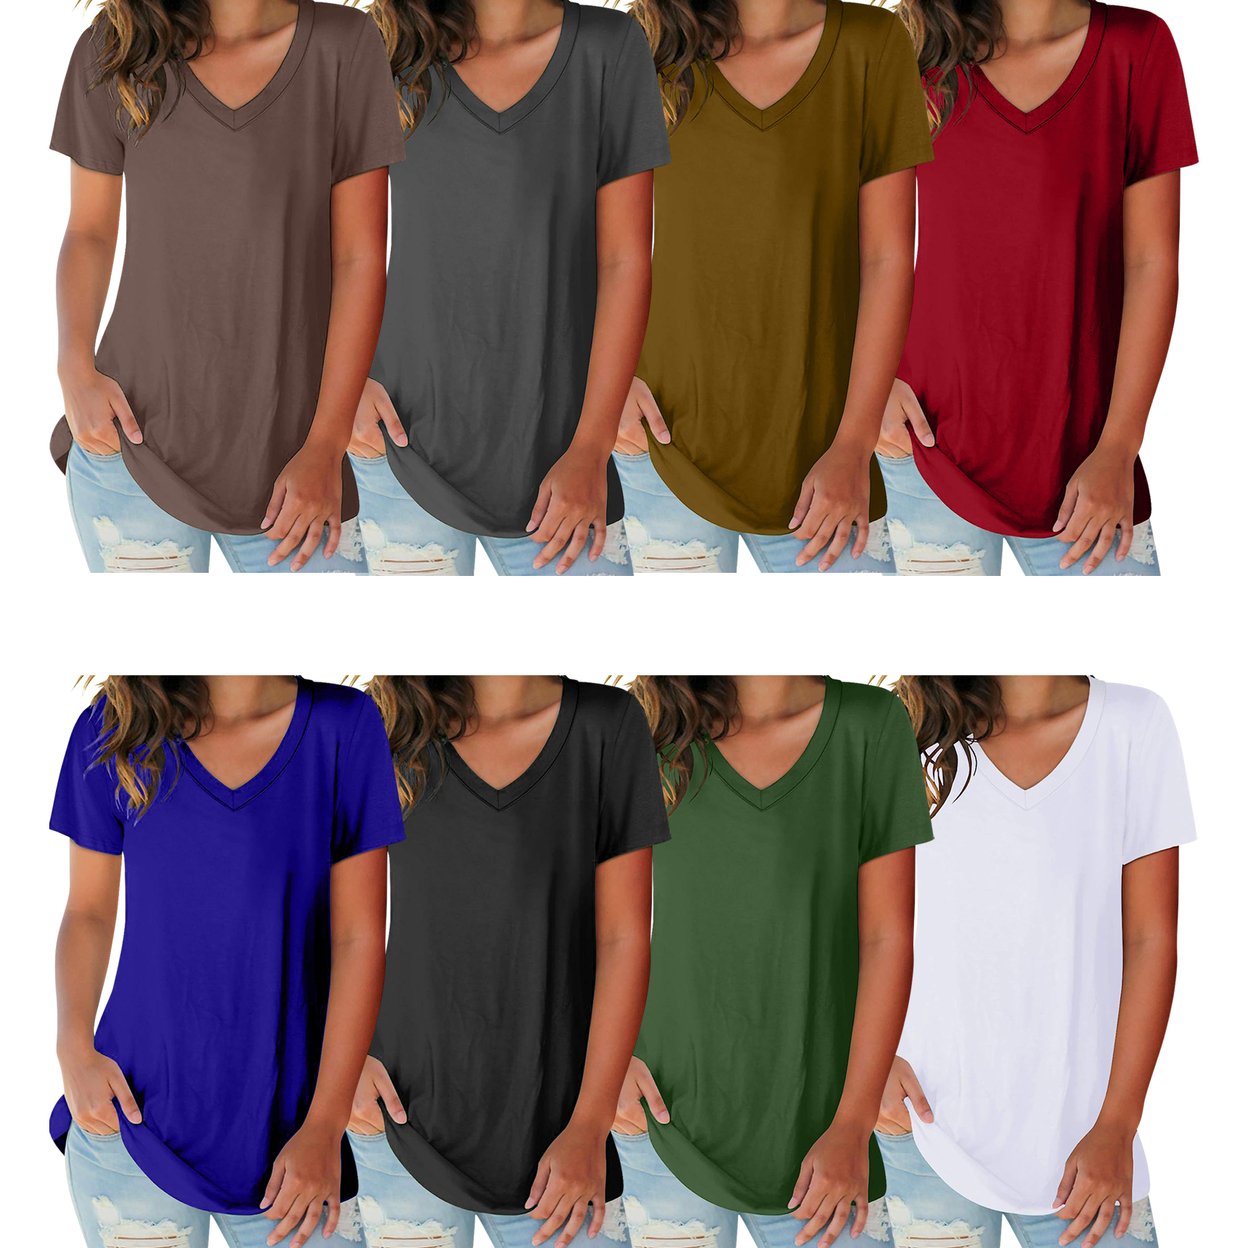 2-Pack: Women's Ultra Soft Smooth Cotton Blend Basic V-Neck Short Sleeve Shirts - Navy & Red, X-large